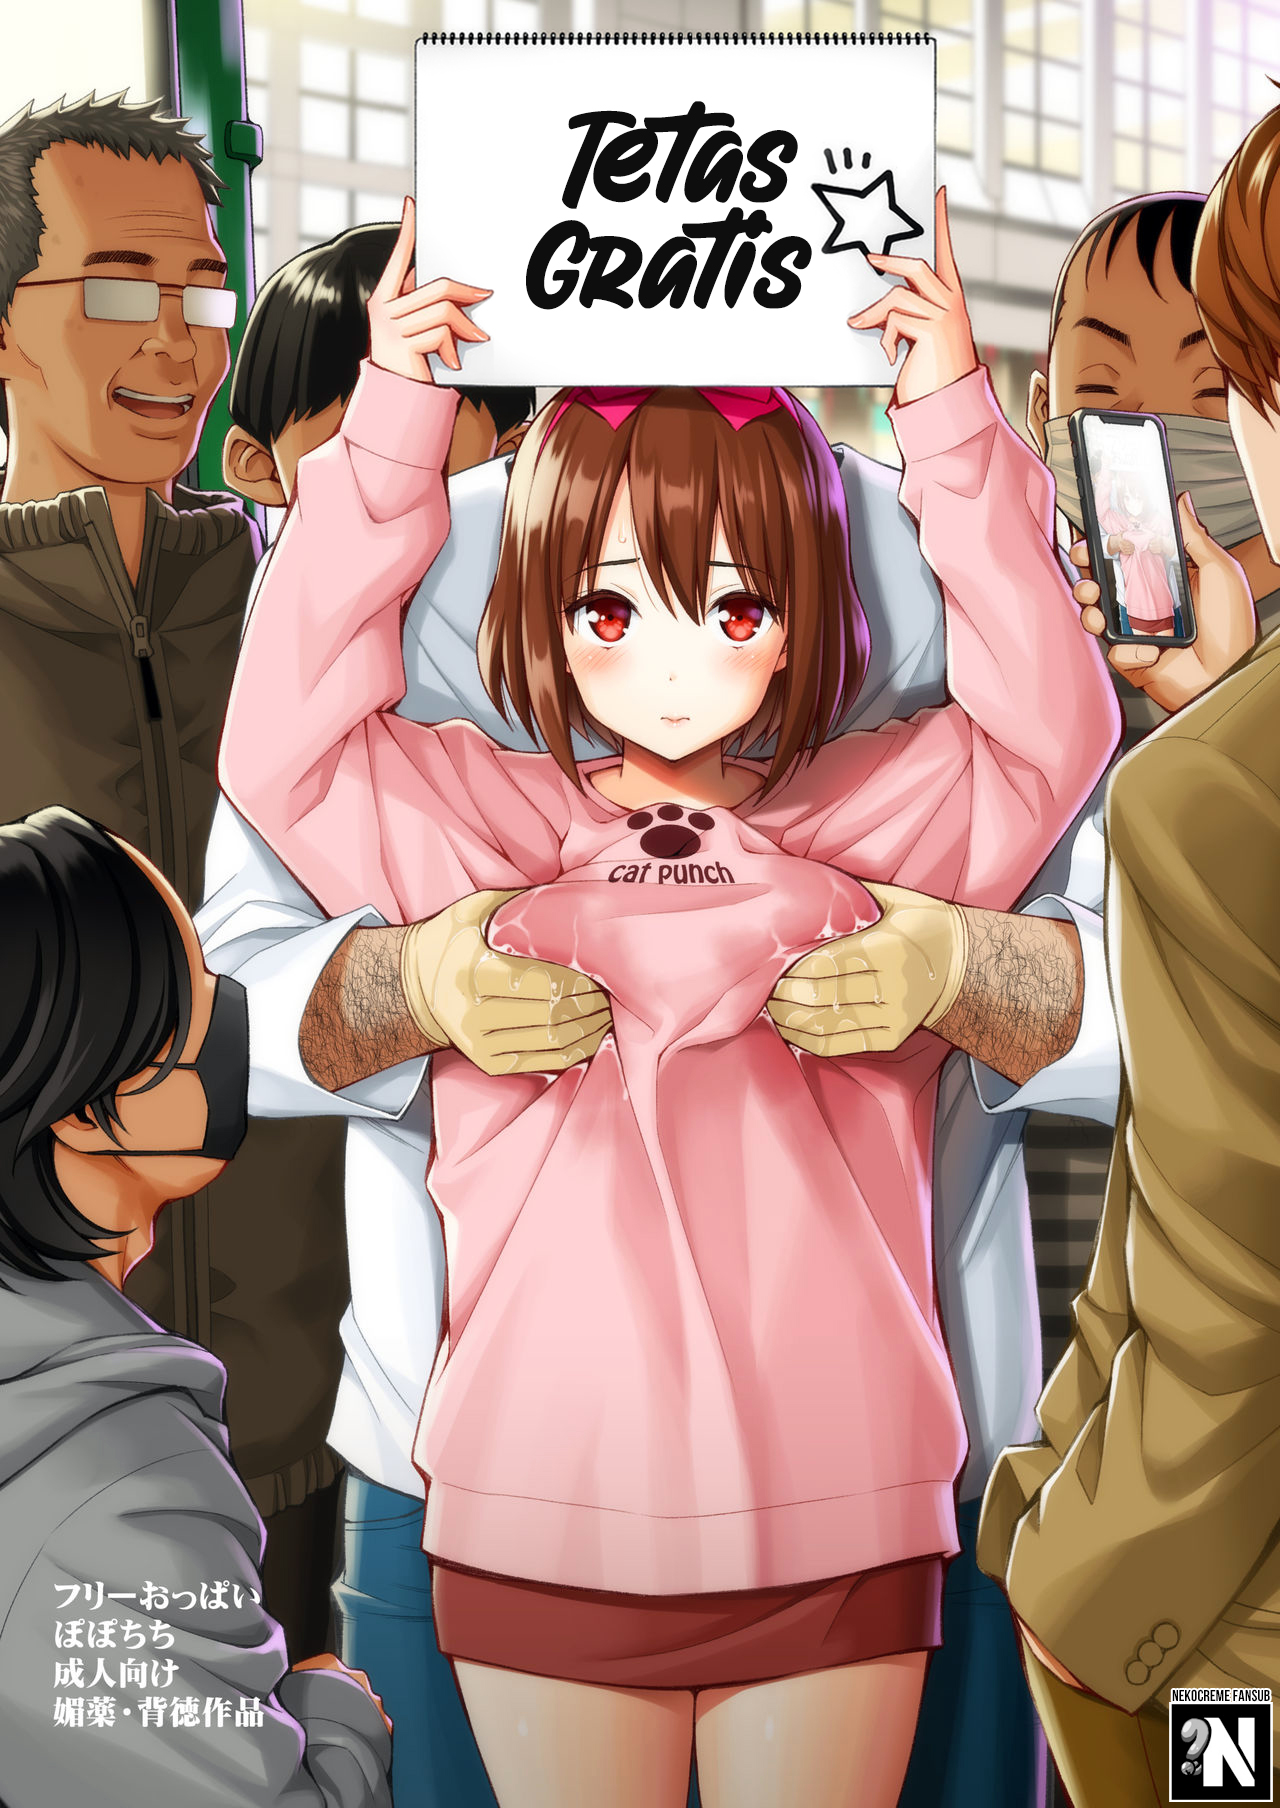 Mangas hentais gratis